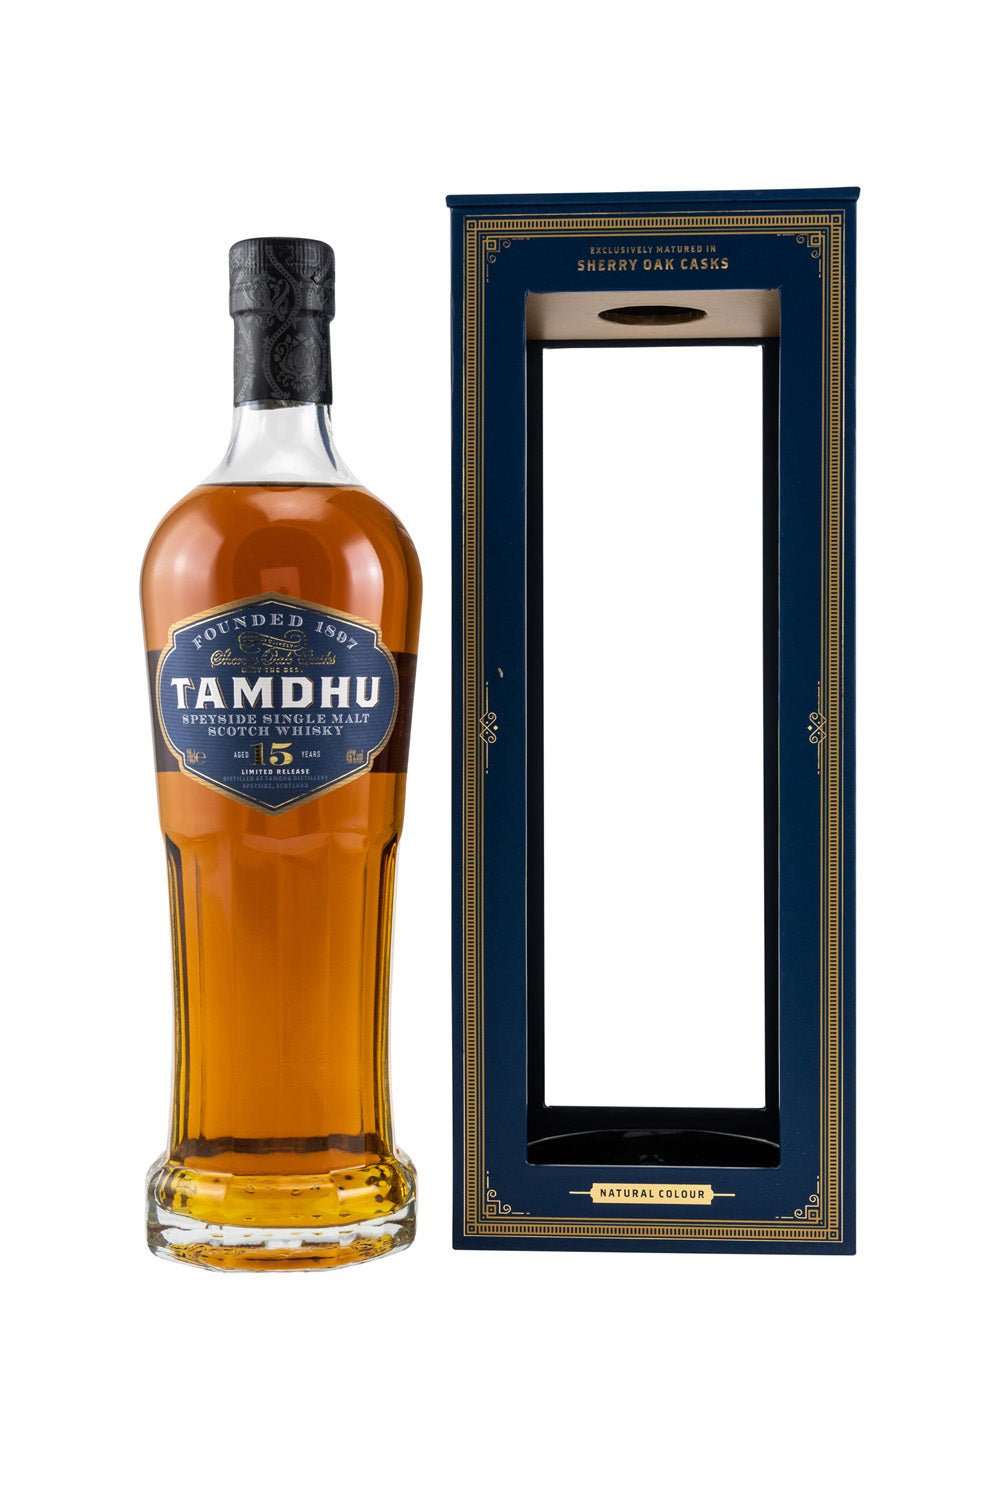 Tamdhu 15 Jahre Speyside Single Malt Scotch Whisky 46% vol. 700ml - Maltimore